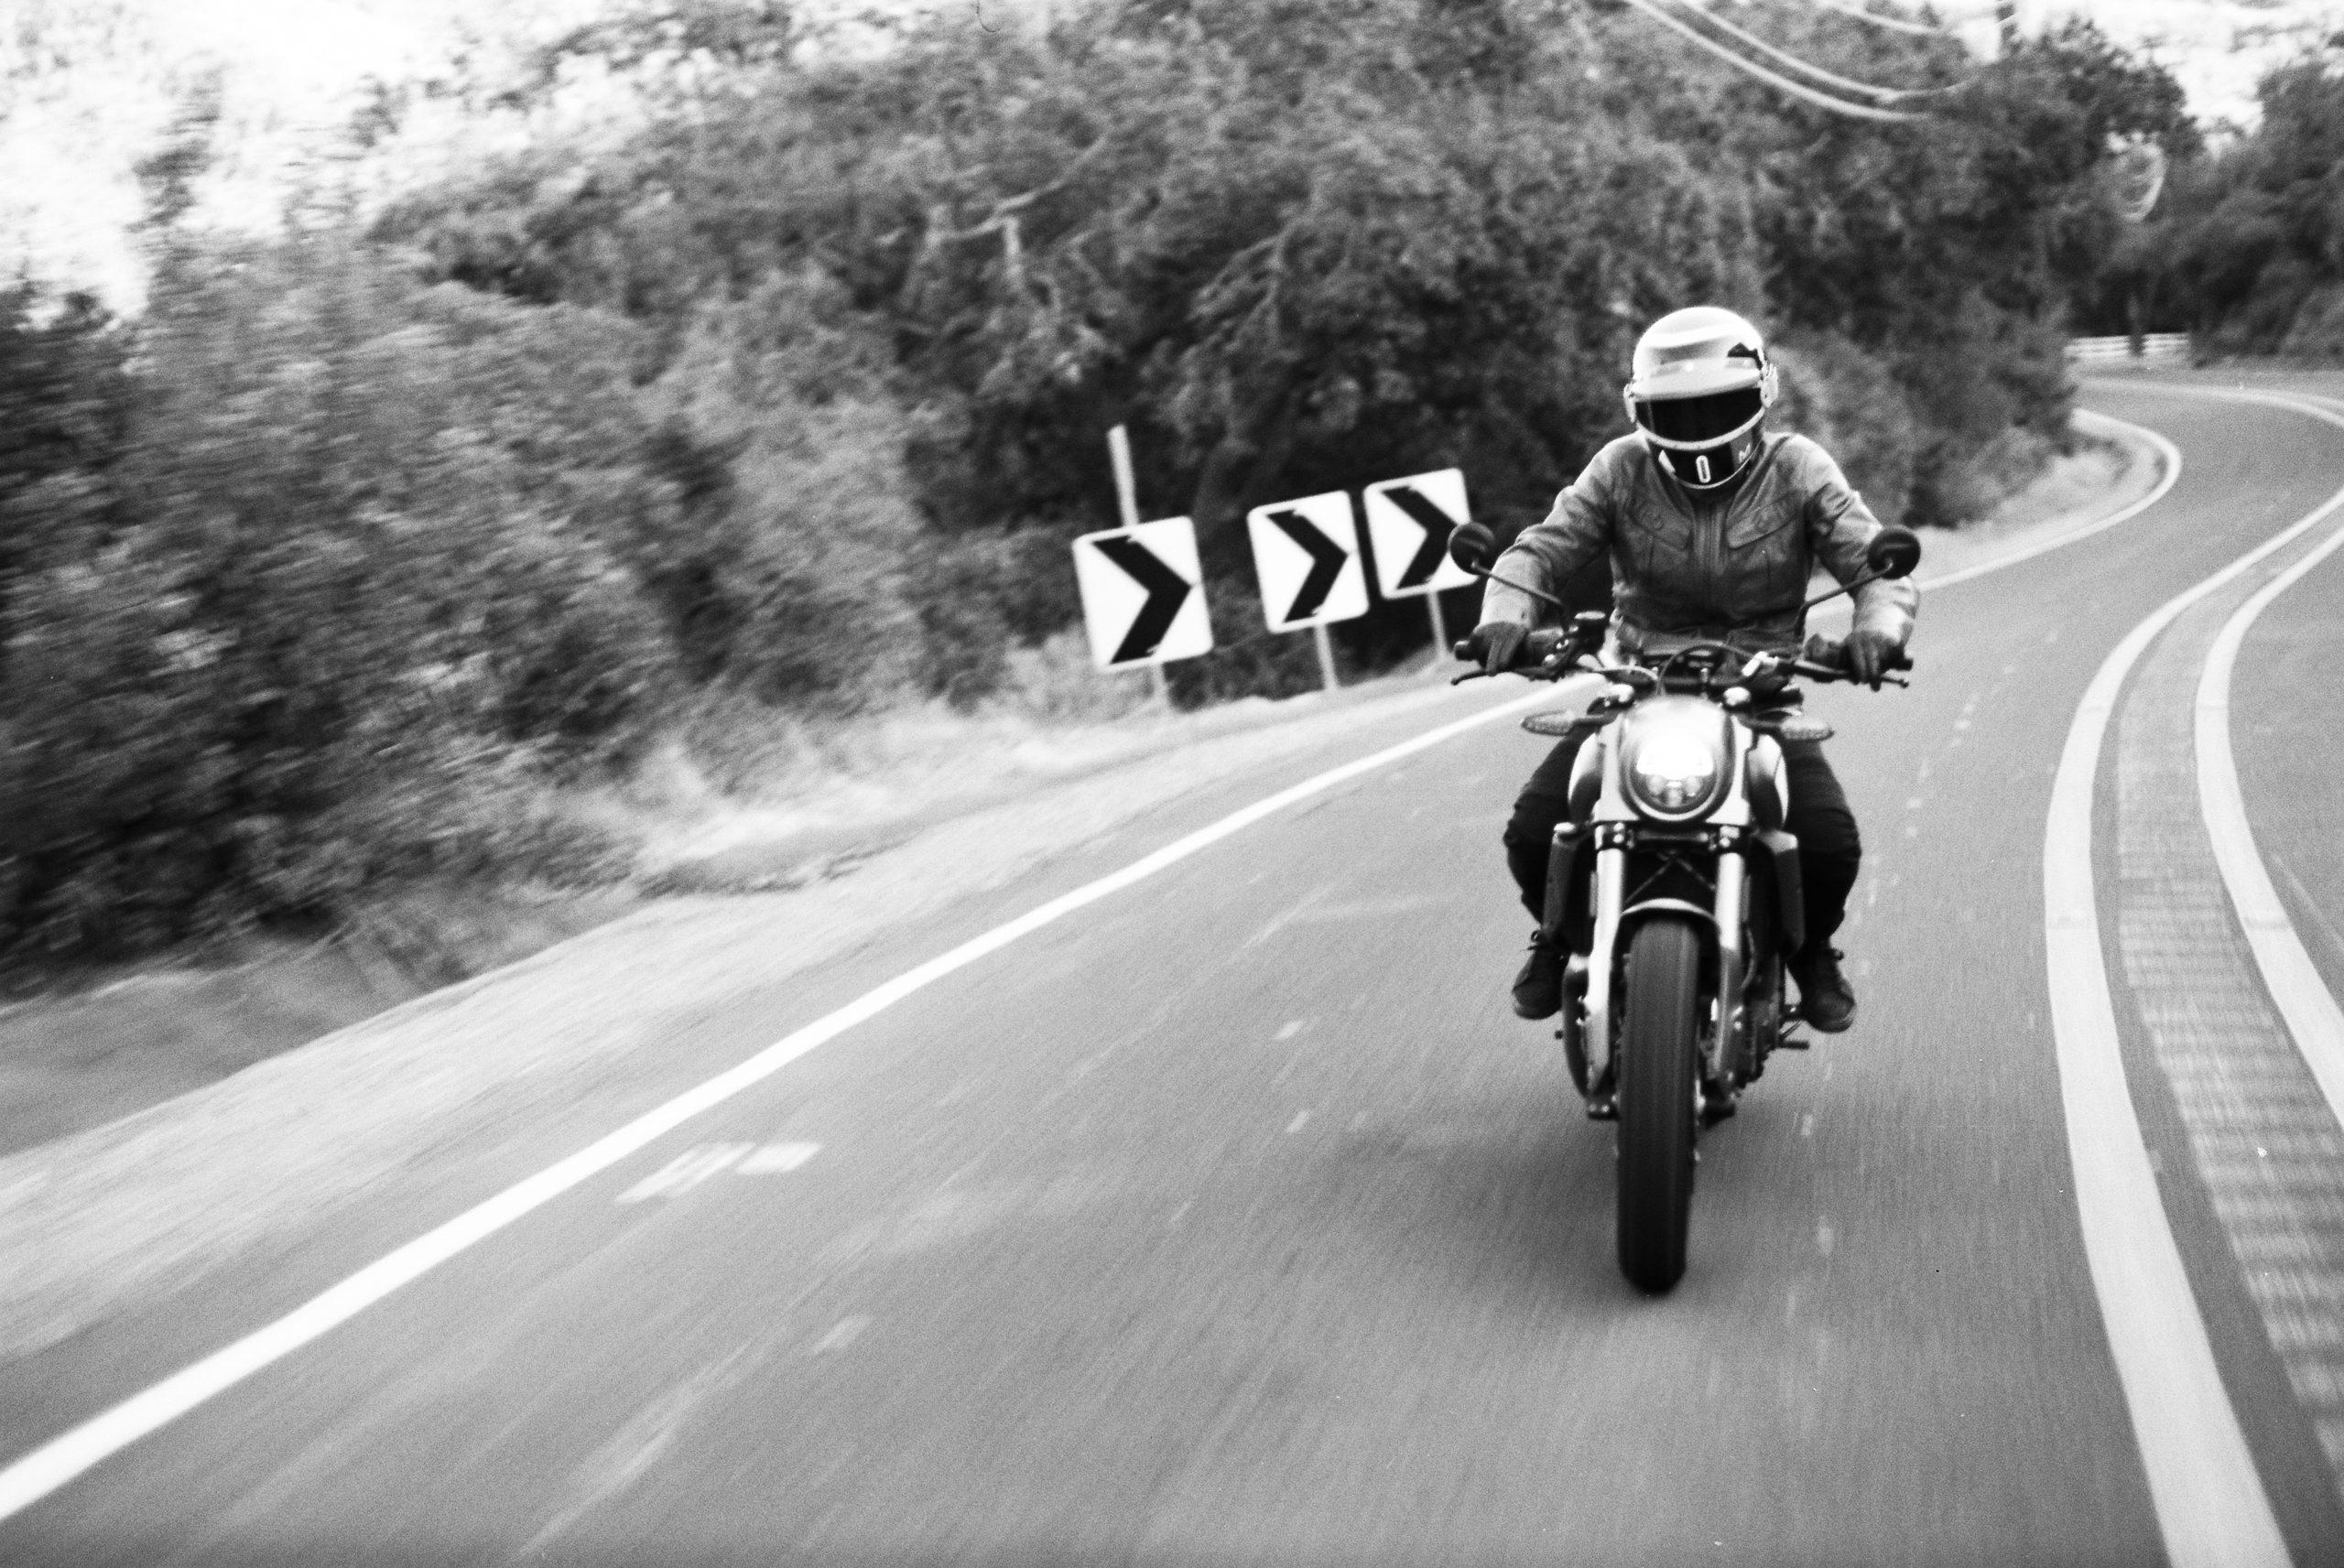 Patrick Flynn riding an Indian FTR 1200 S motorcycle